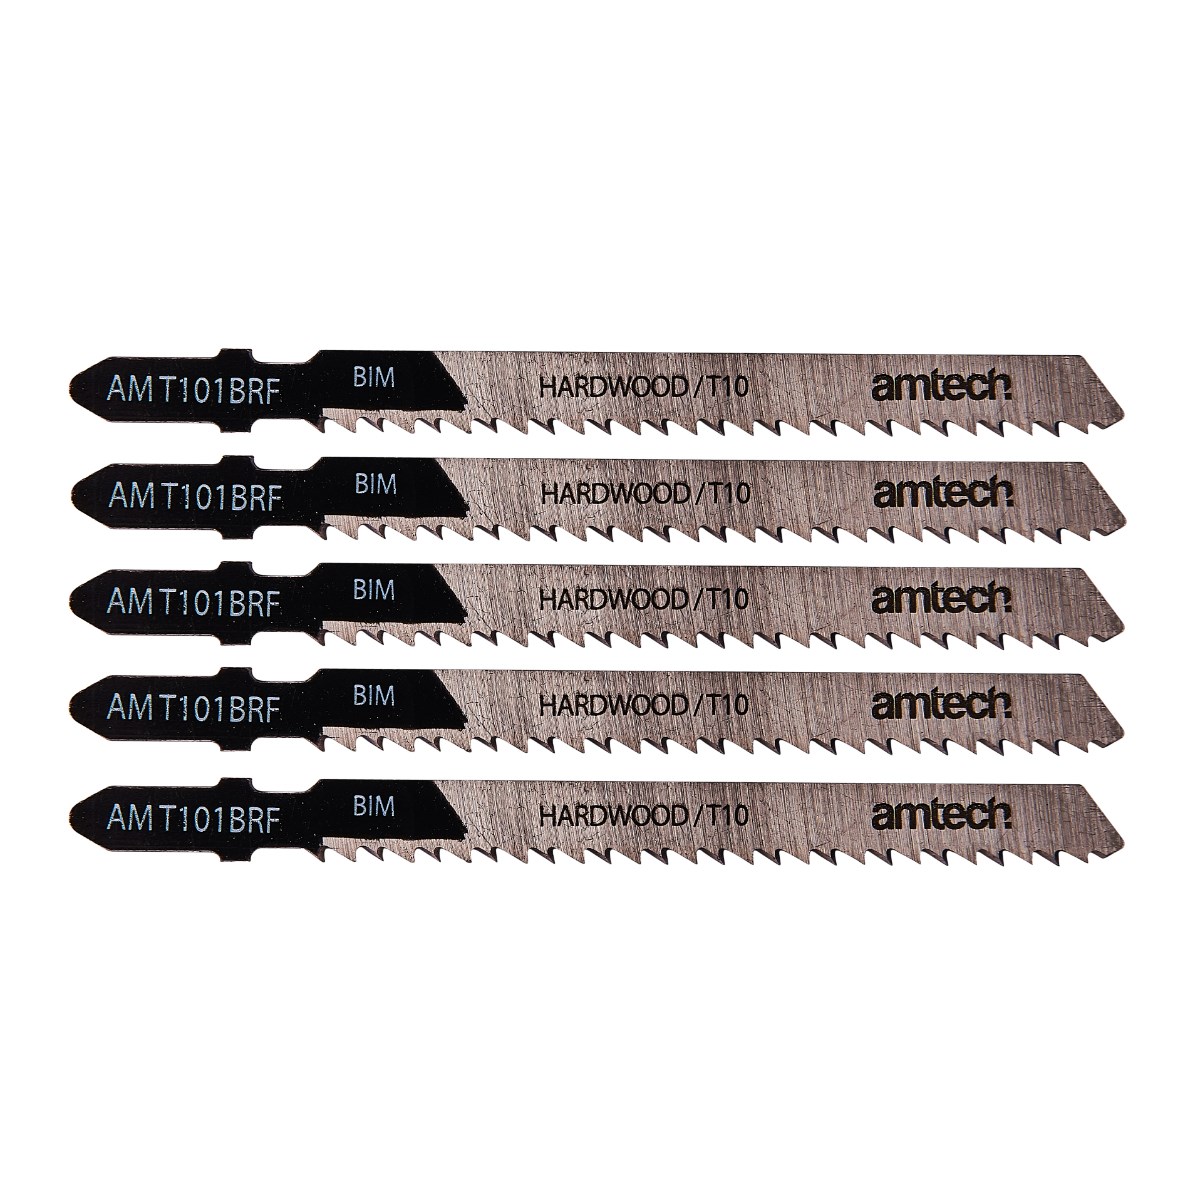 AMT101BRF 5 x Jigsaw Blades Set Reverse Cut WOOD Cutting Hardwood 10 TPI 